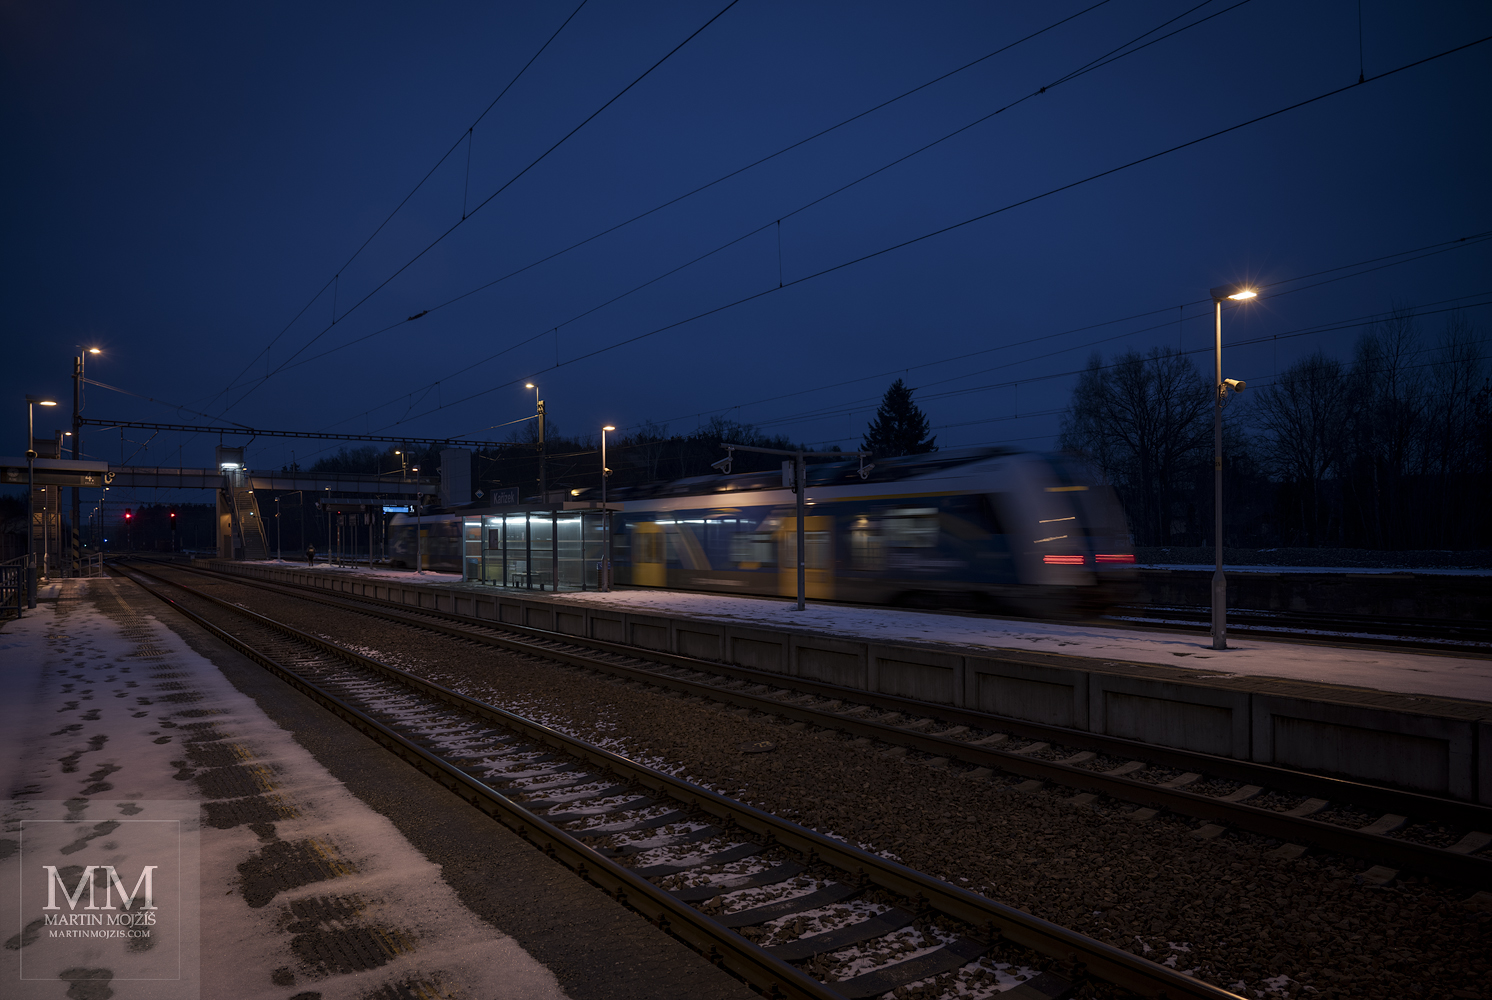 The night passenger train departs towards Beroun.